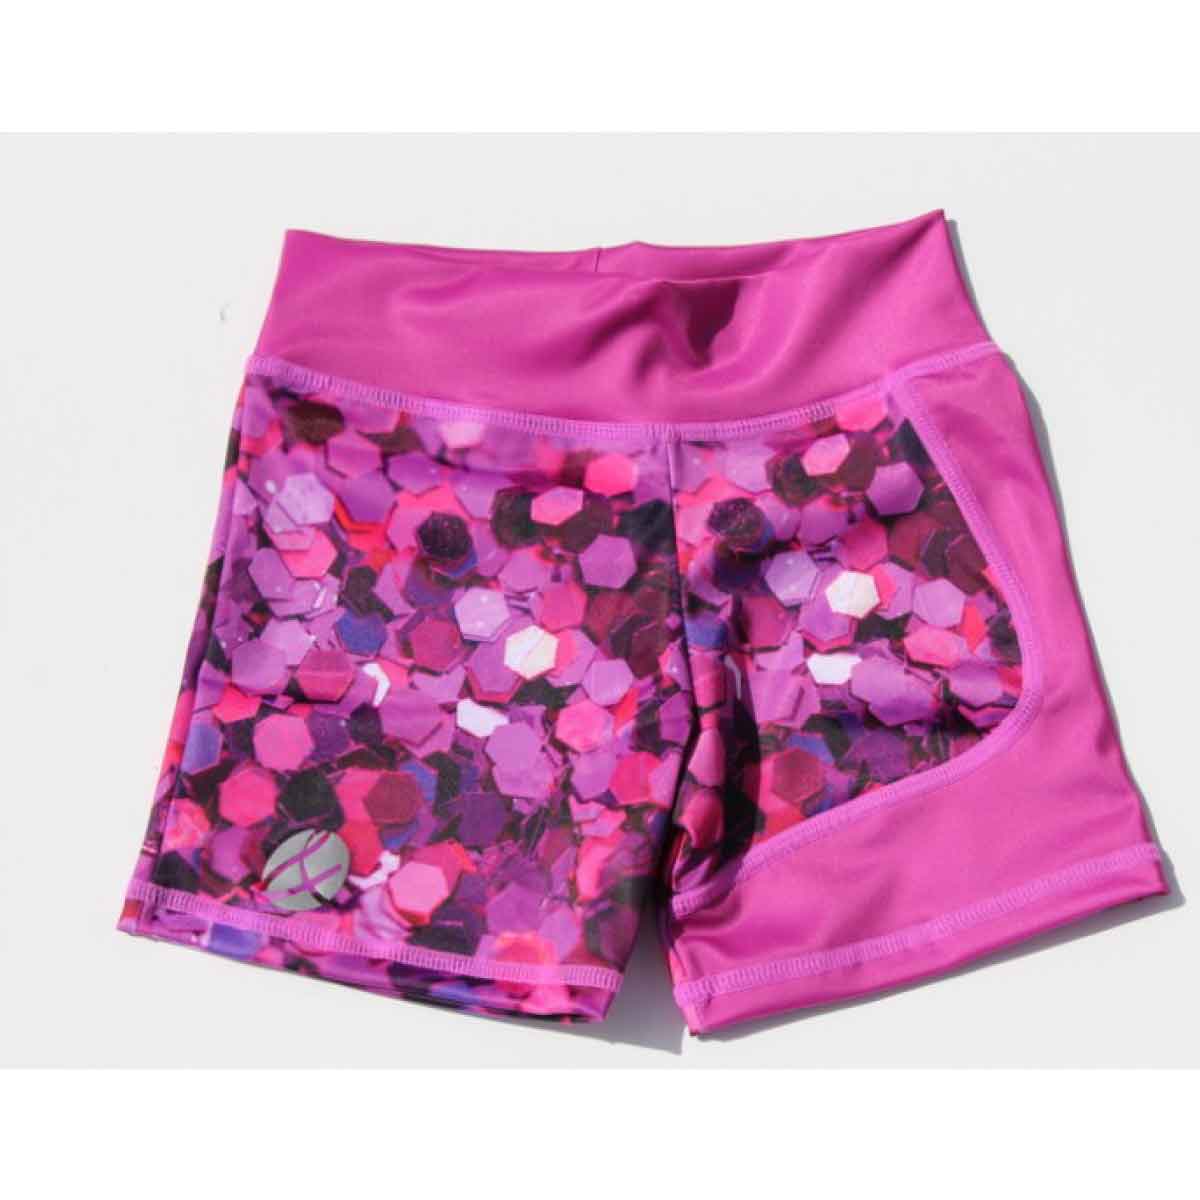 Love - pink spangle girls' shorts